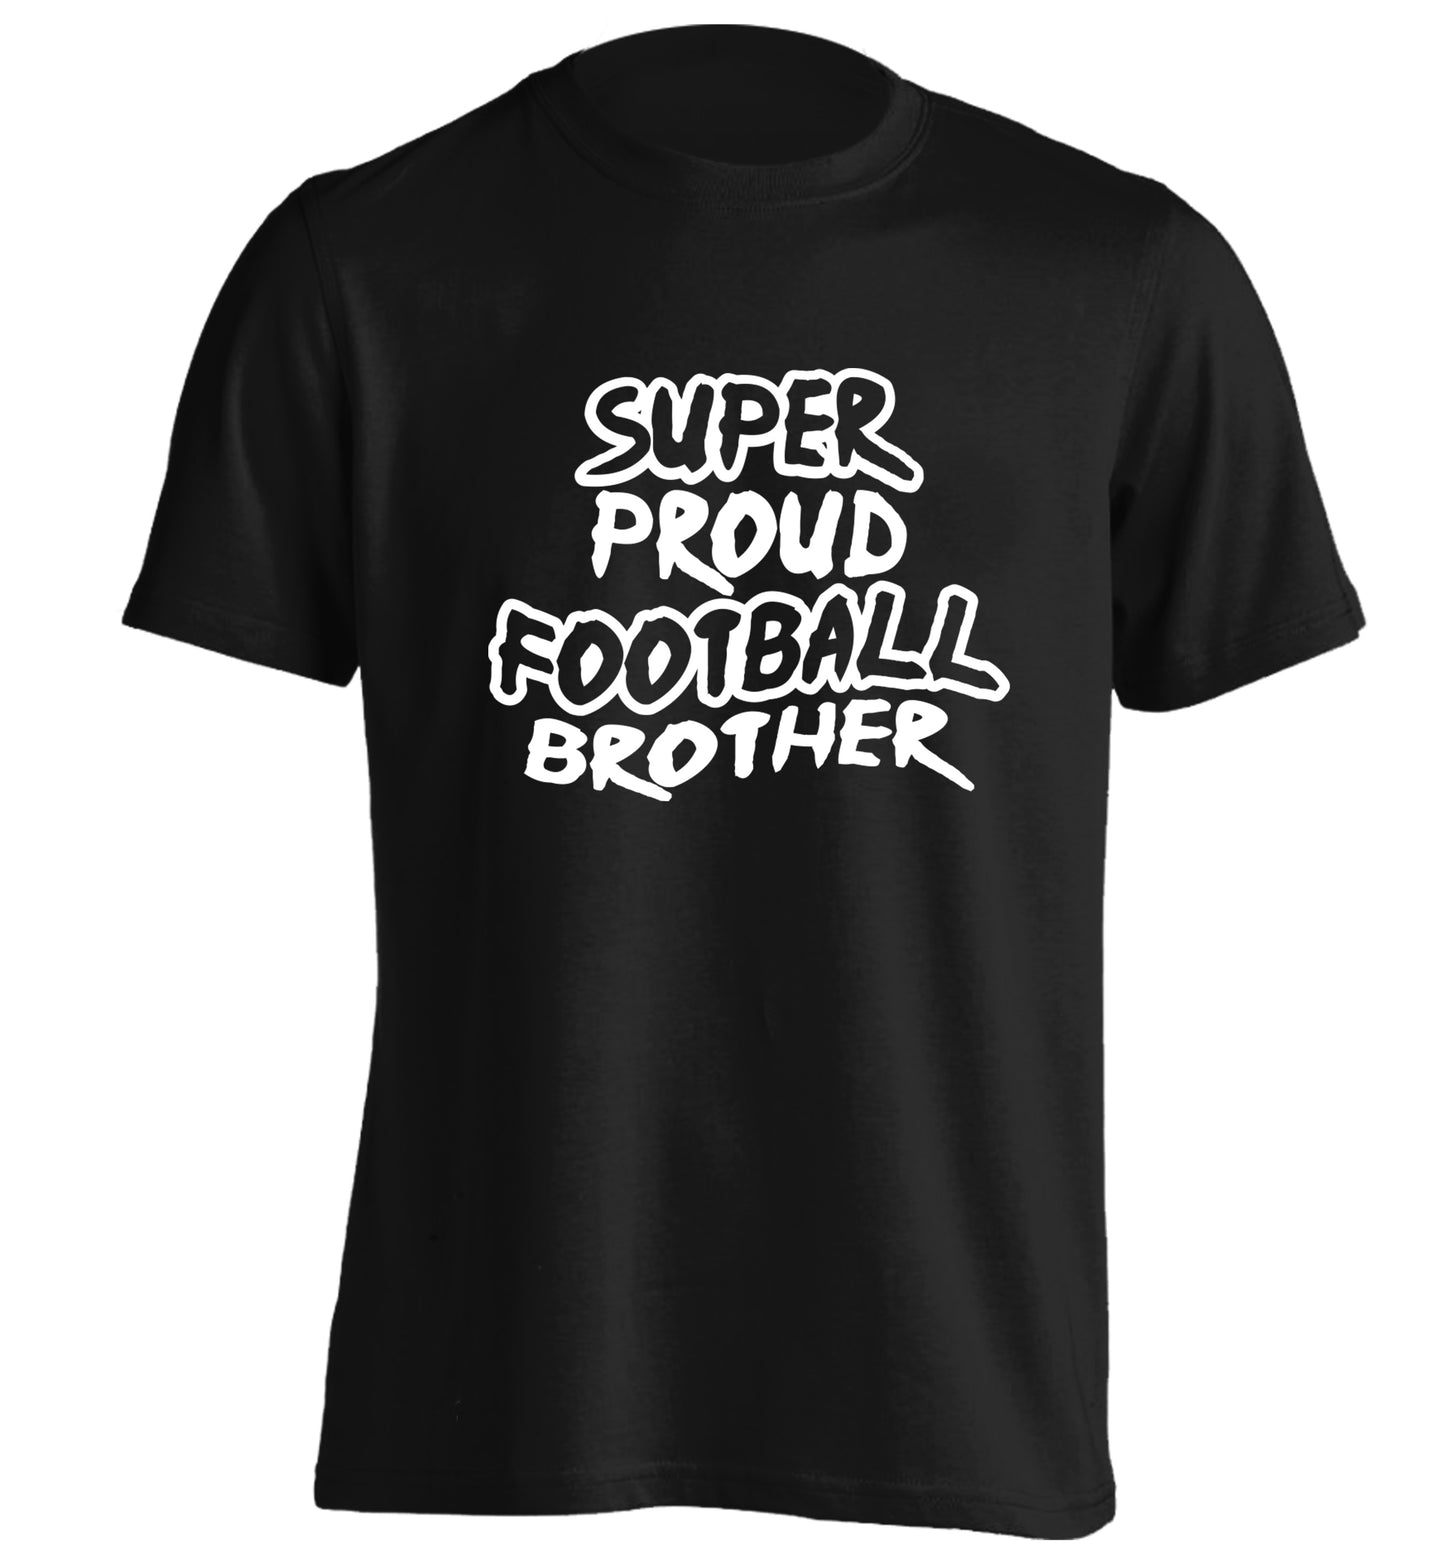 Super proud football brother adults unisexblack Tshirt 2XL